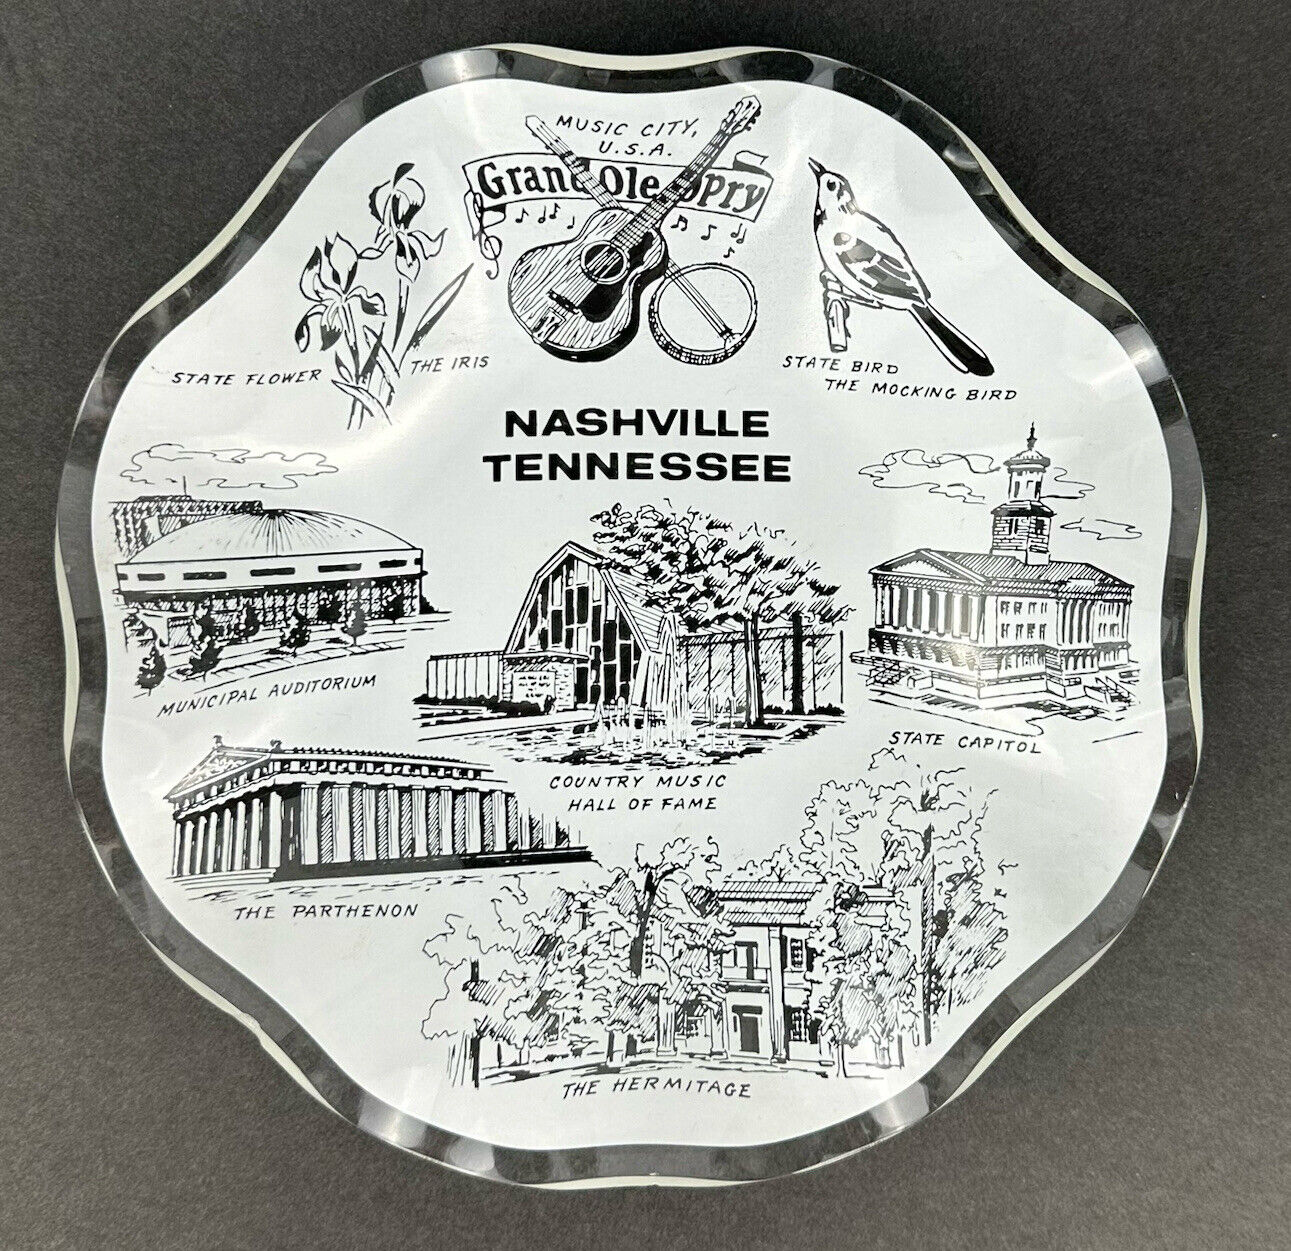 Grand Ole Opry Music City Nashville Tennessee Souvenir Plate Bent Glass Dish